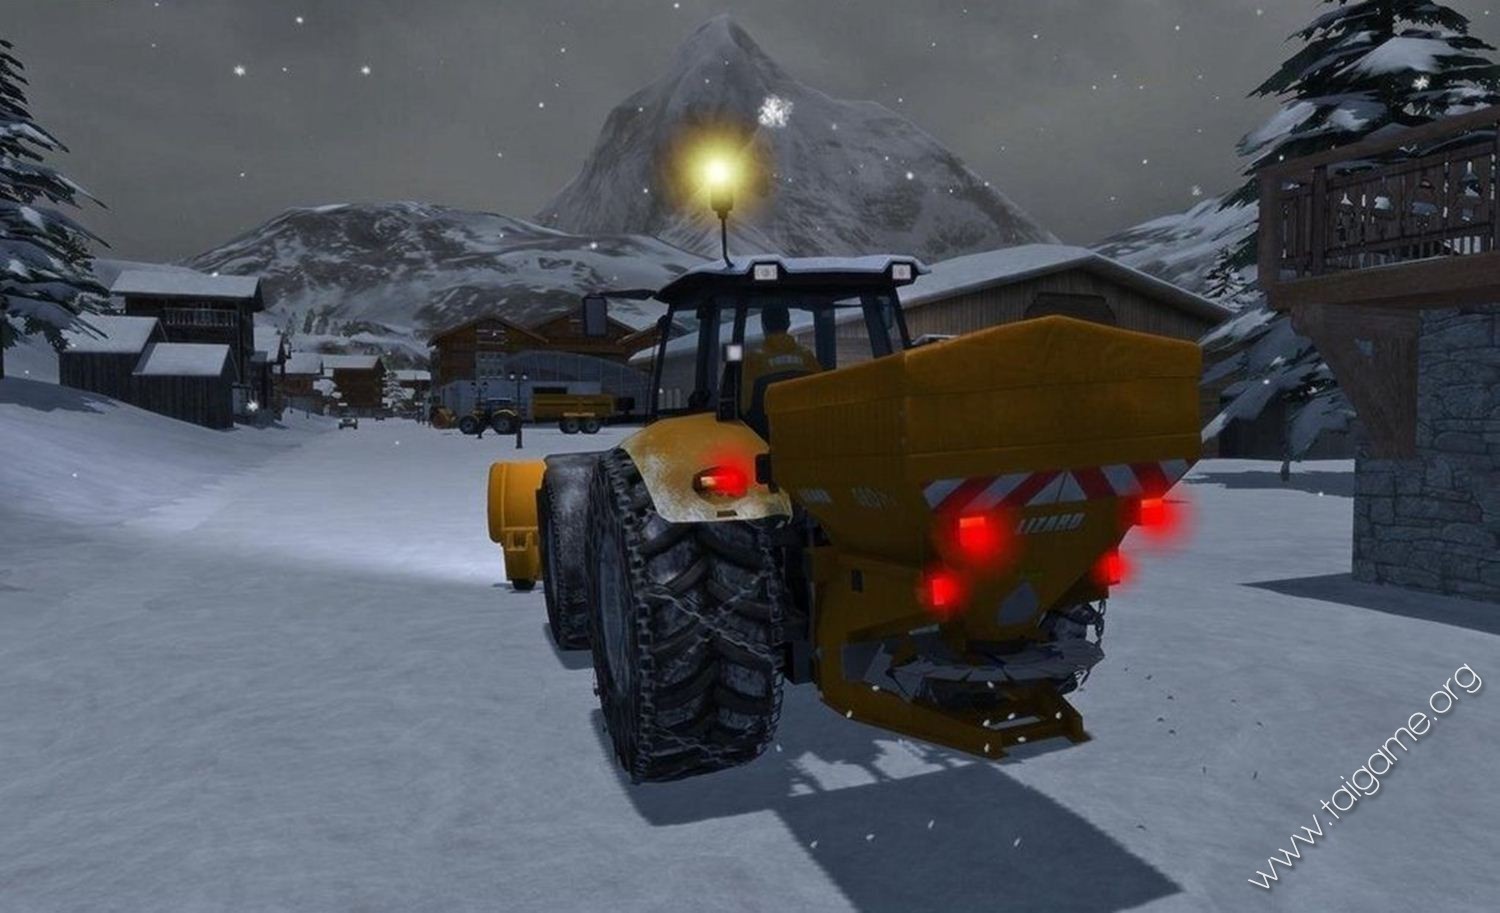 ski region simulator 2012 download full version